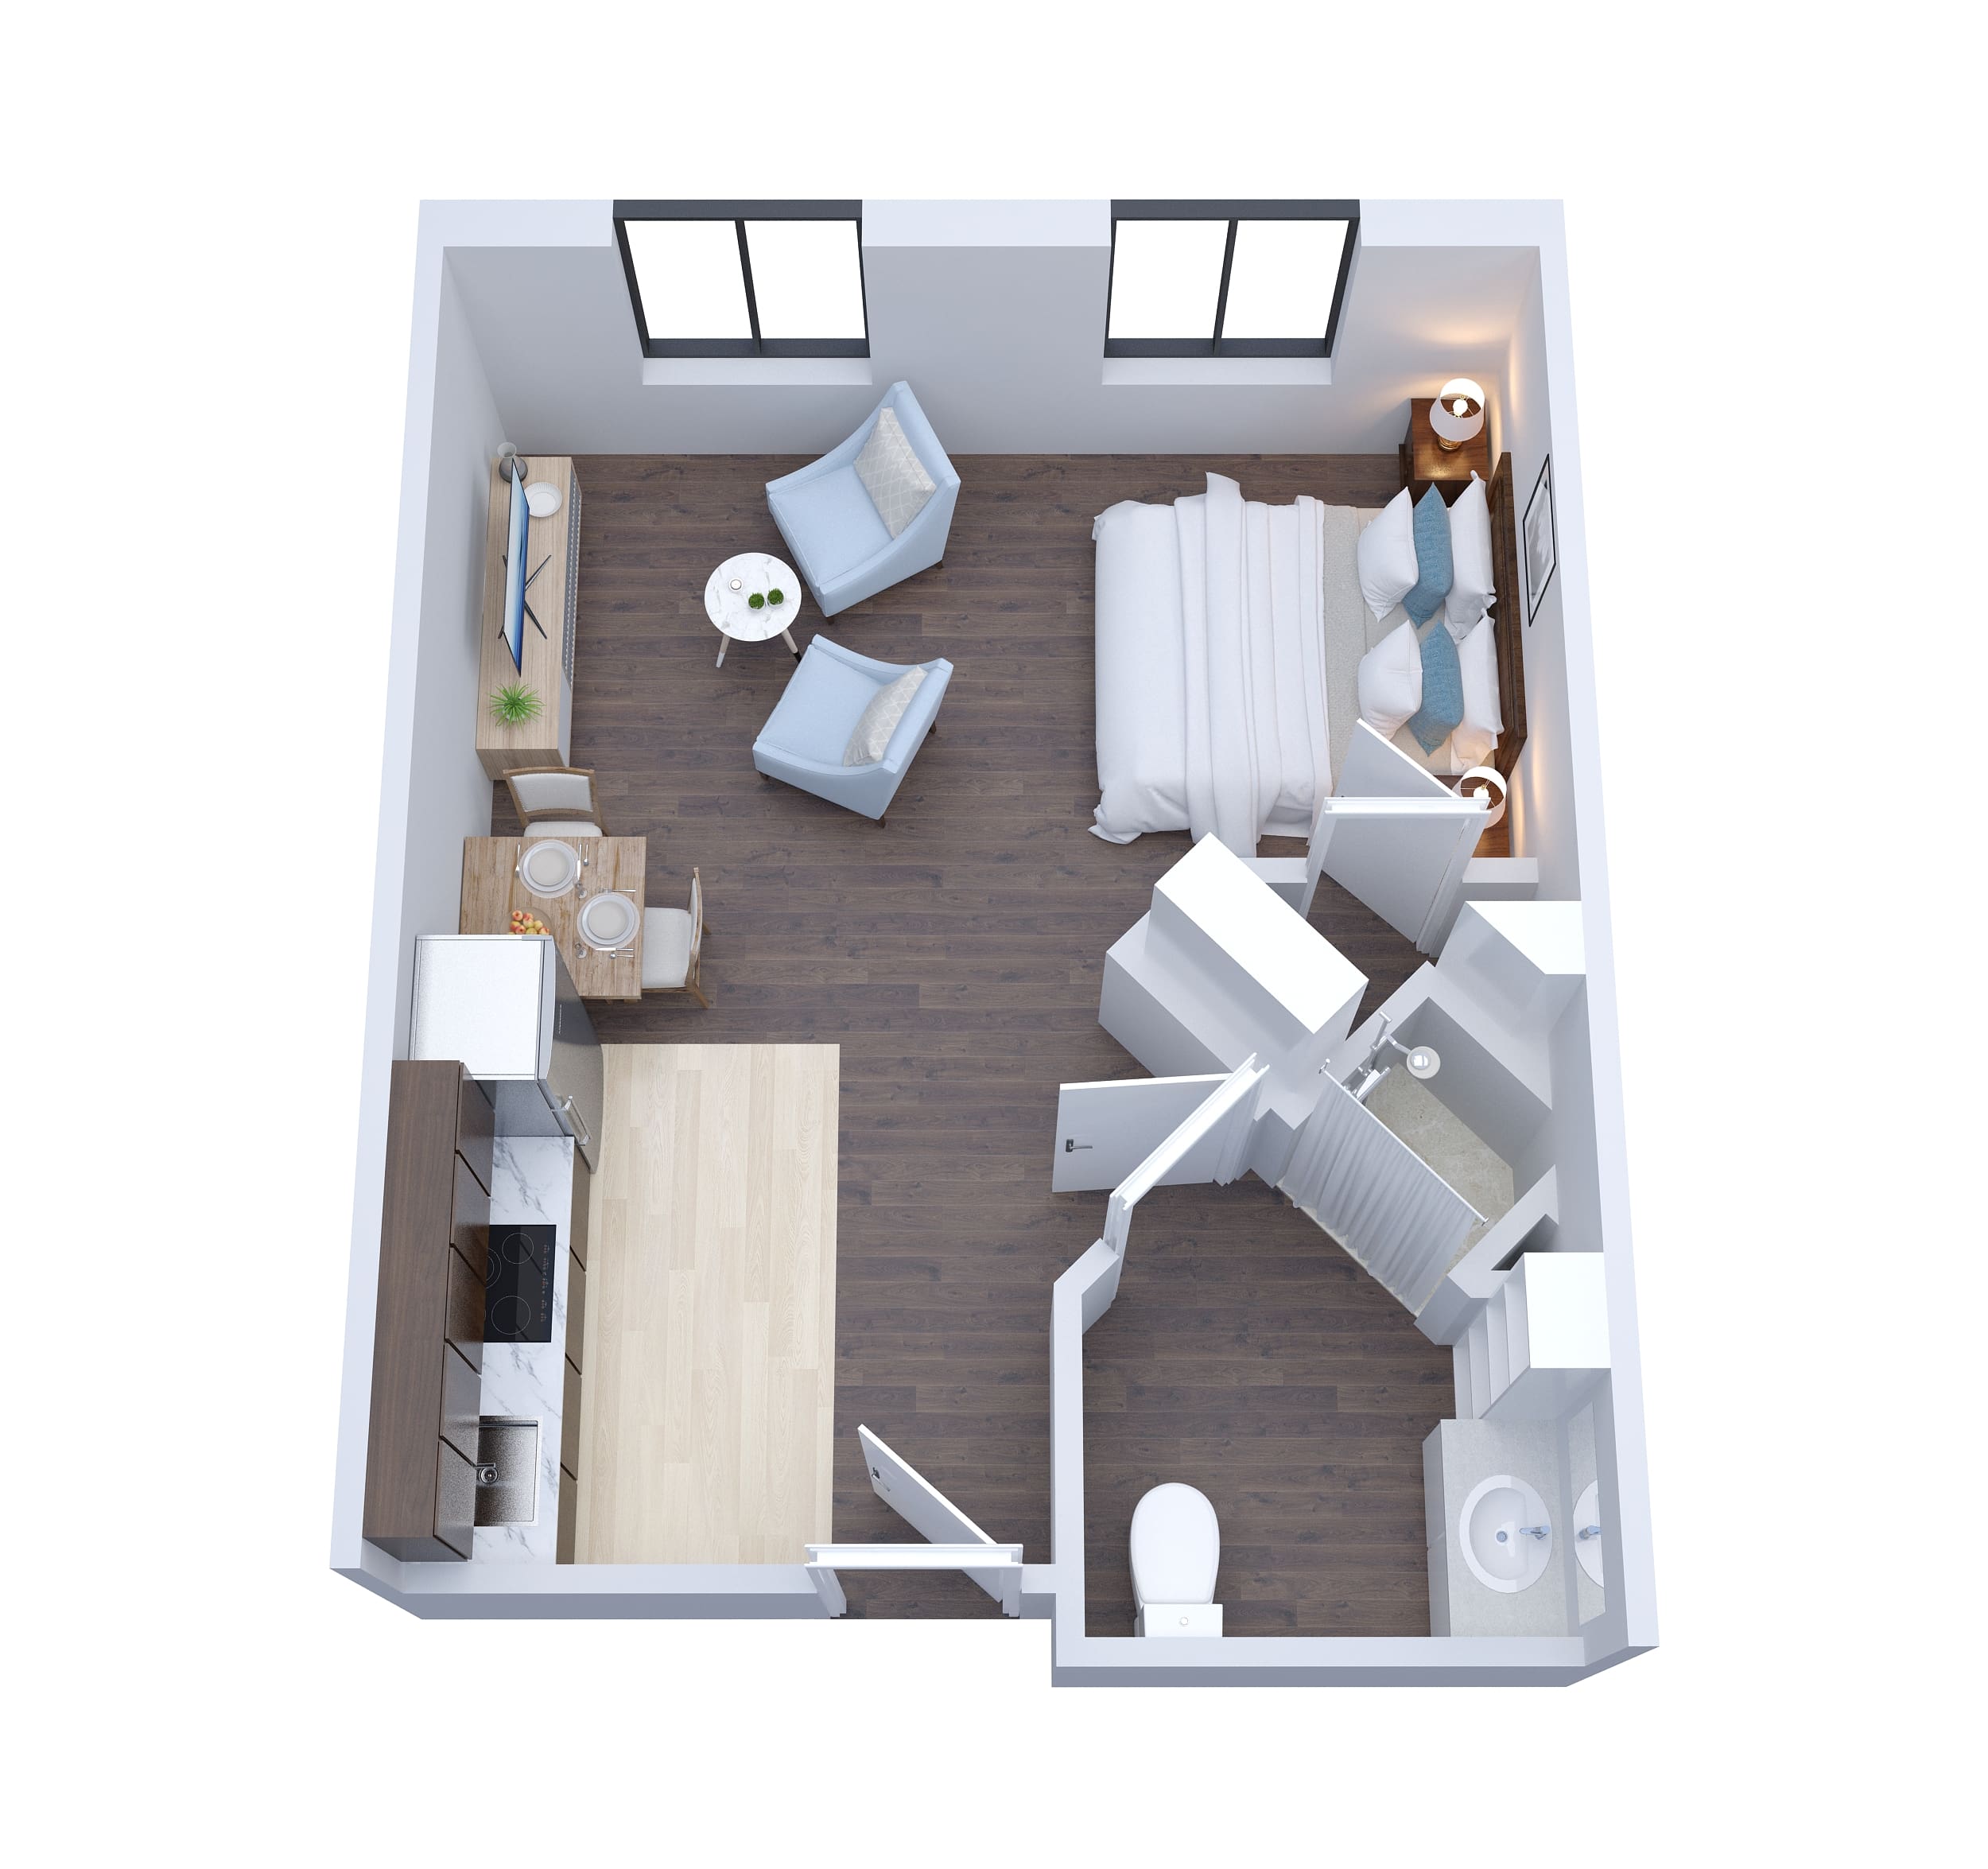 The 2D 3D Floor Plan Real Estate | Construction